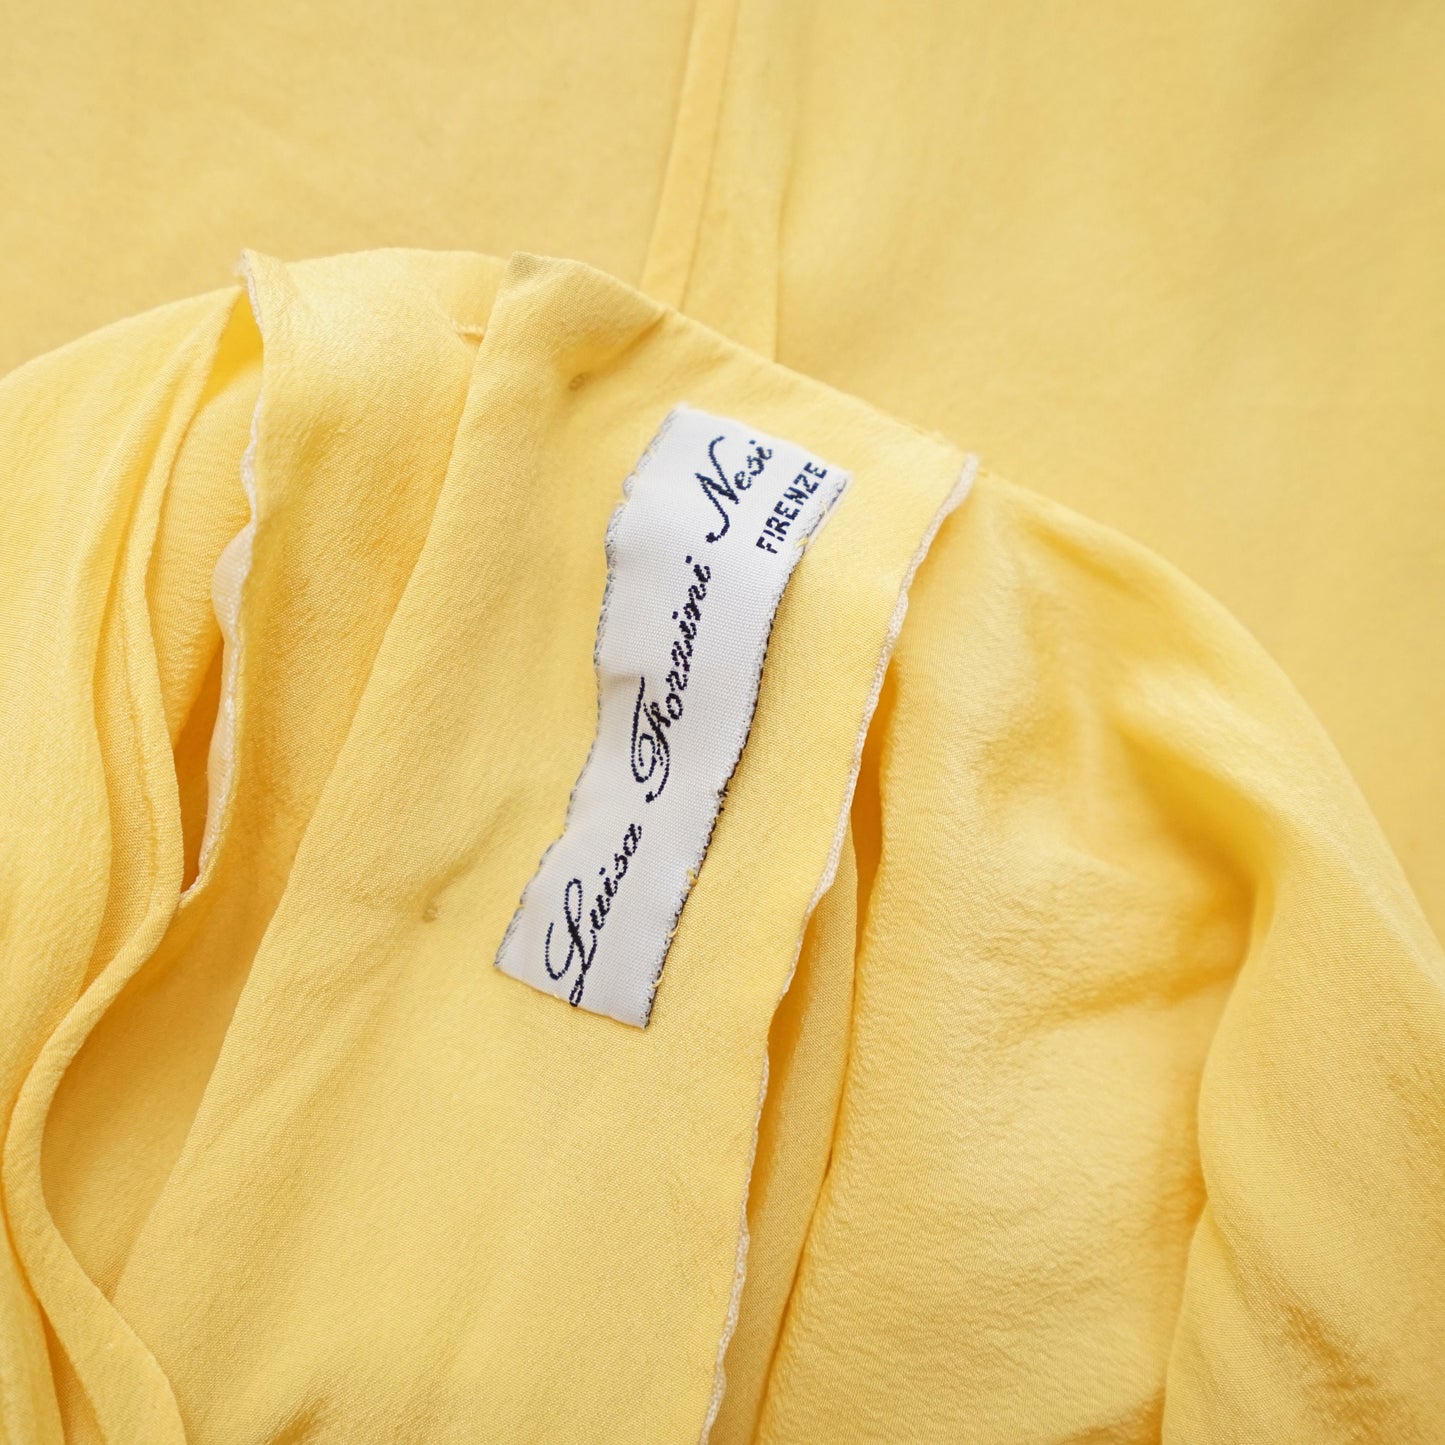 Vintage yellow Blouse size S-M